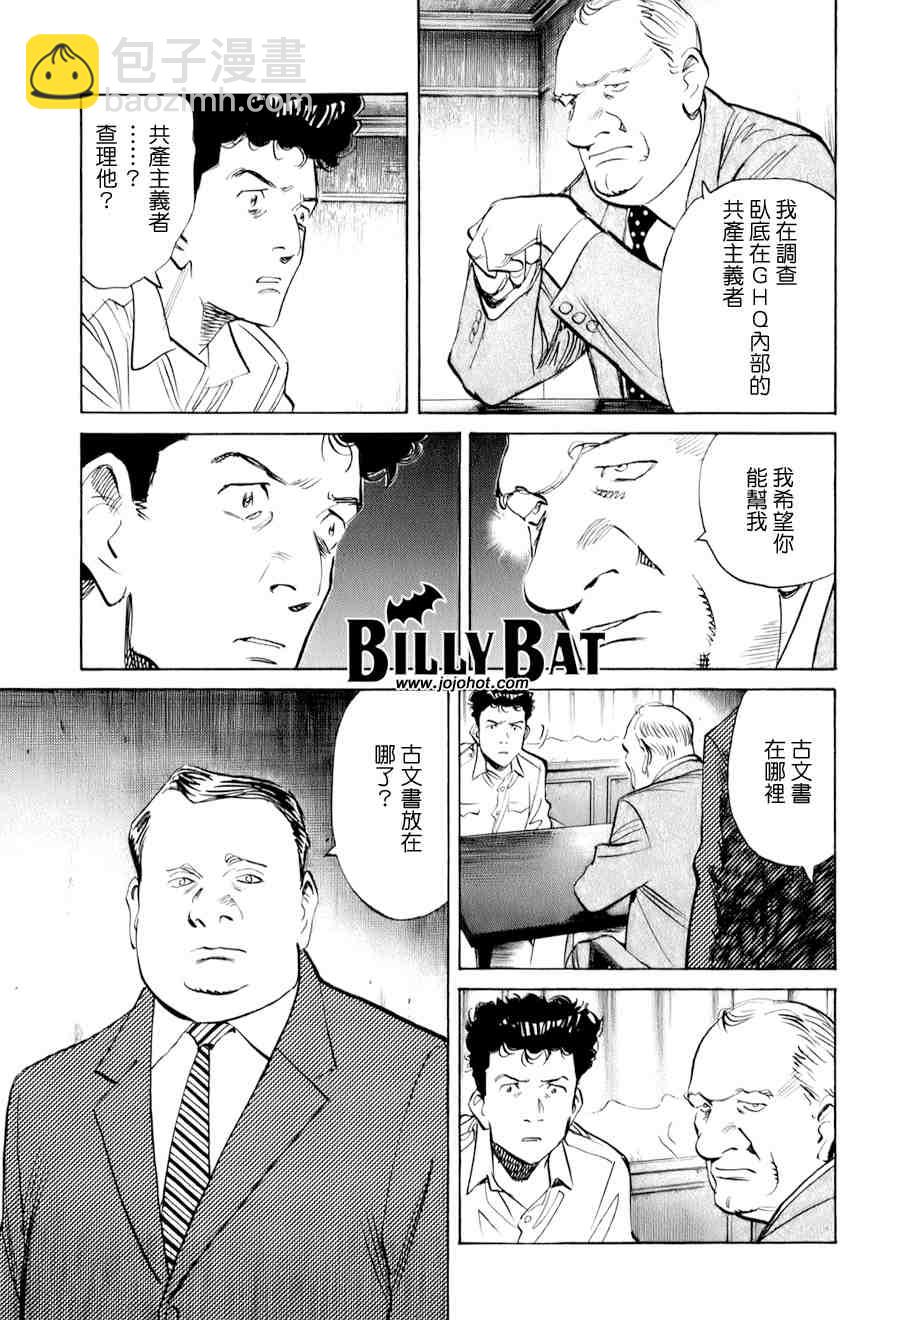 Billy_Bat - 第1卷(3/4) - 8